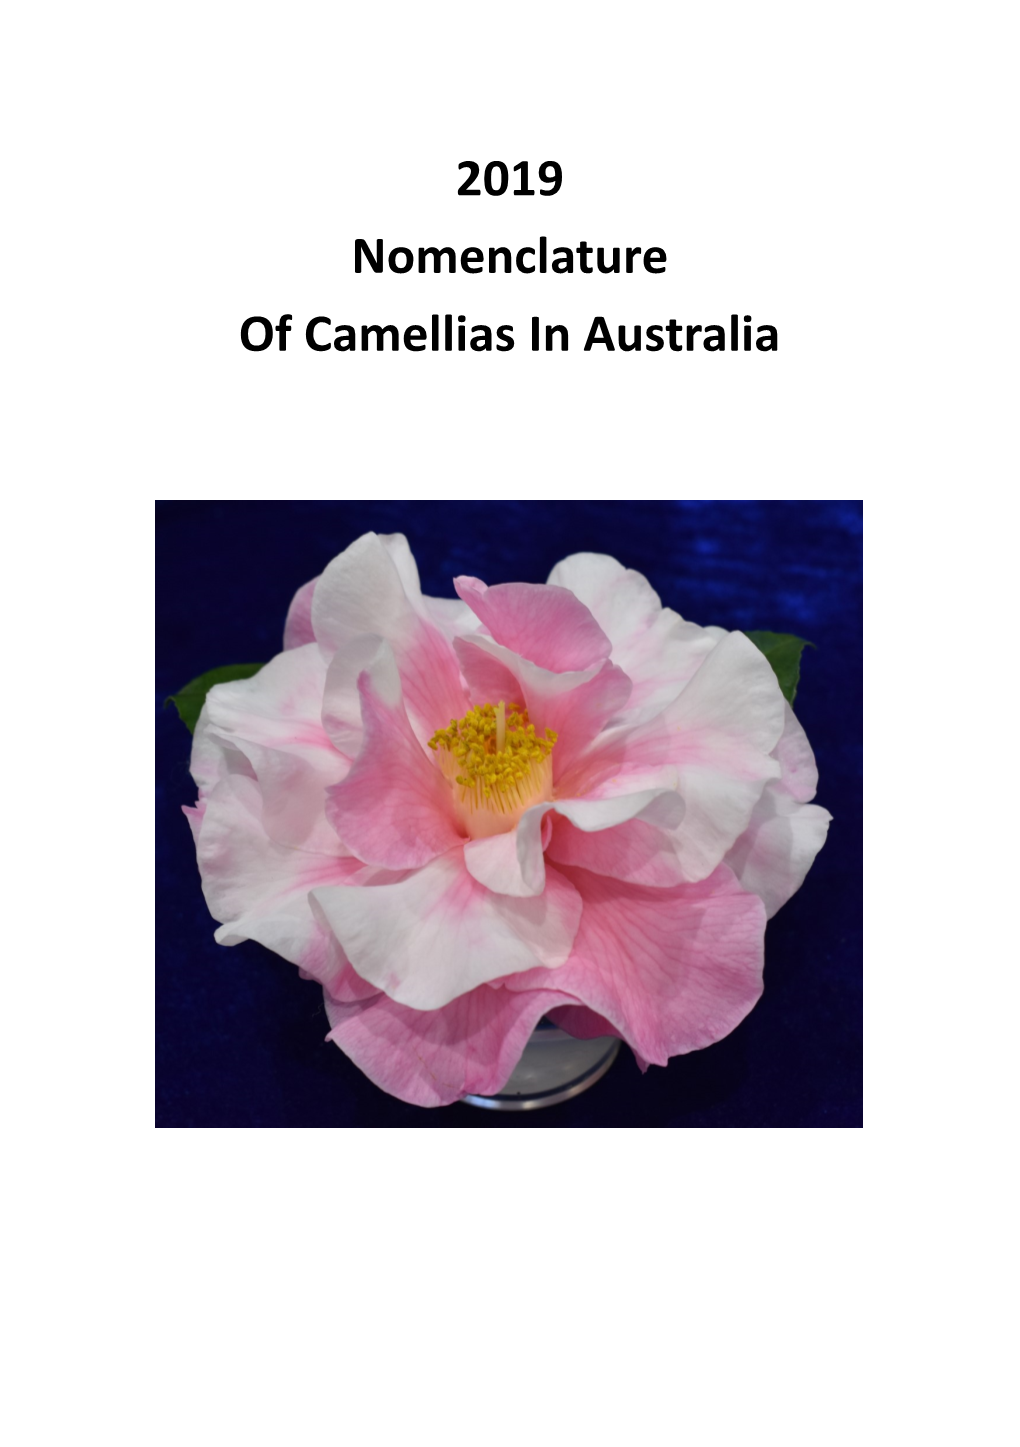 Australian-Camellia-Nomemclature-29-10-2019